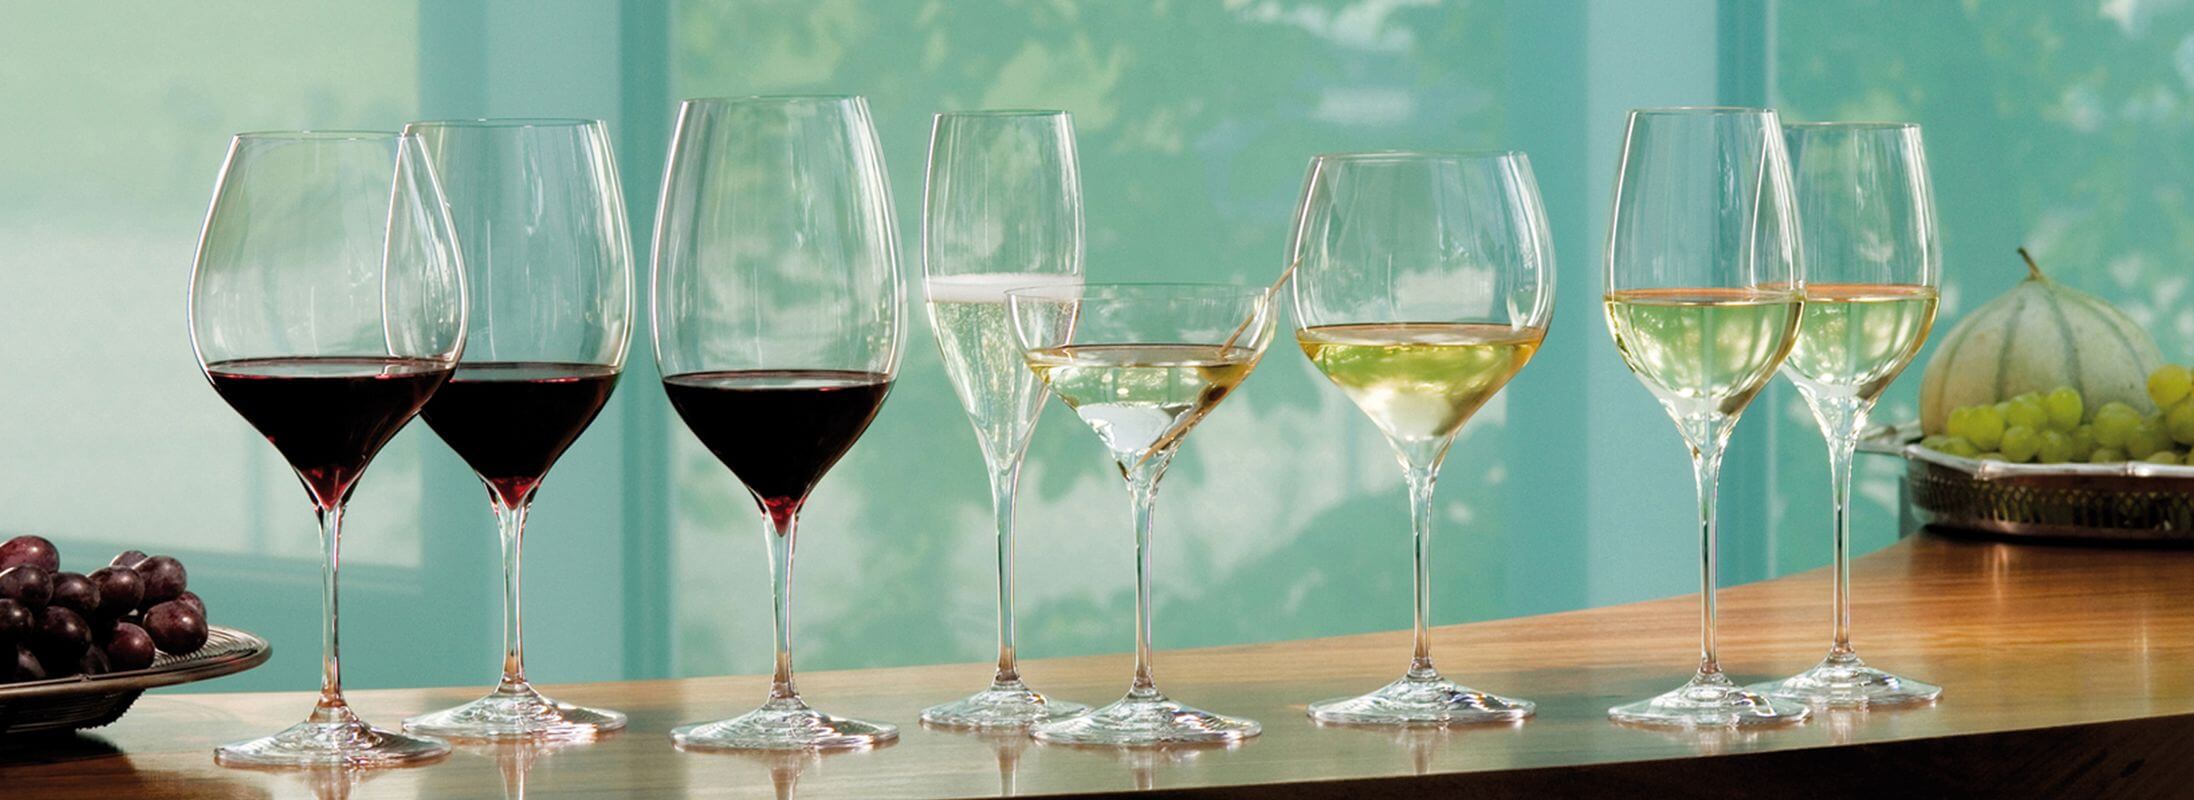 Riedel Veritas Cabernet / Merlot Wine Glasses - Set of 2